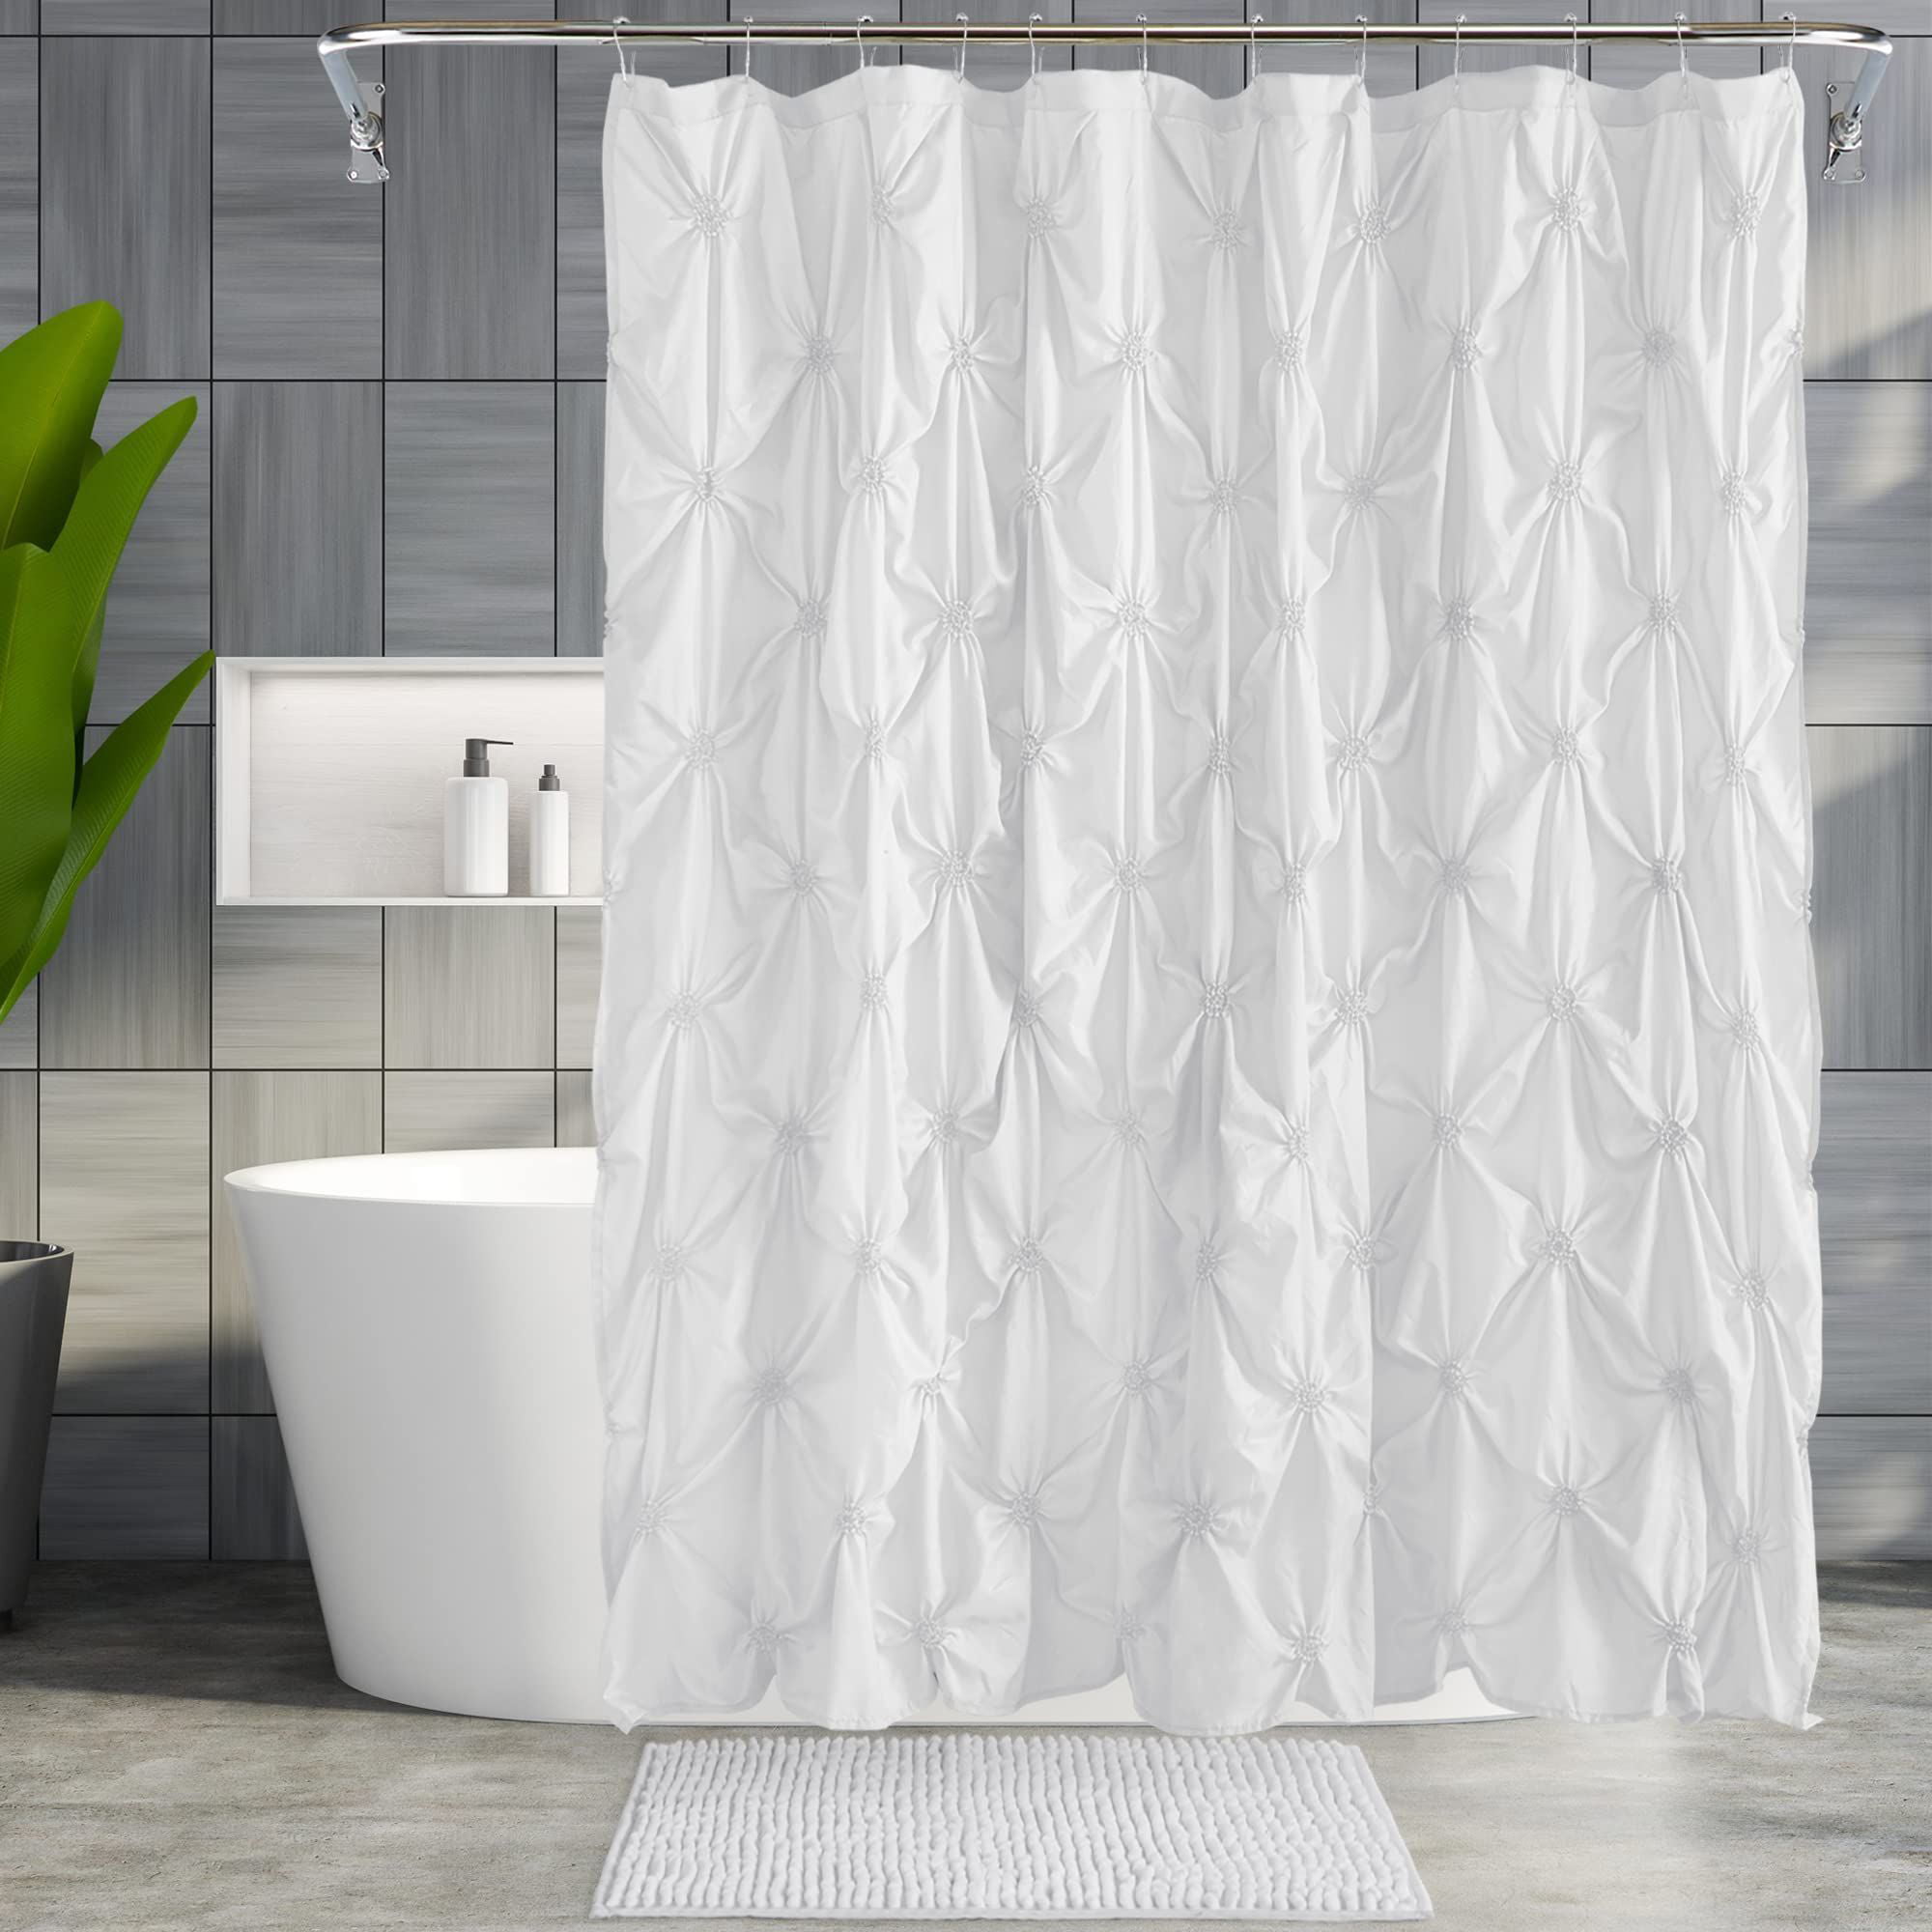 Green Grass Waterproo White Elegant Fabric Bathroom Shower Curtain 12 Hooks 